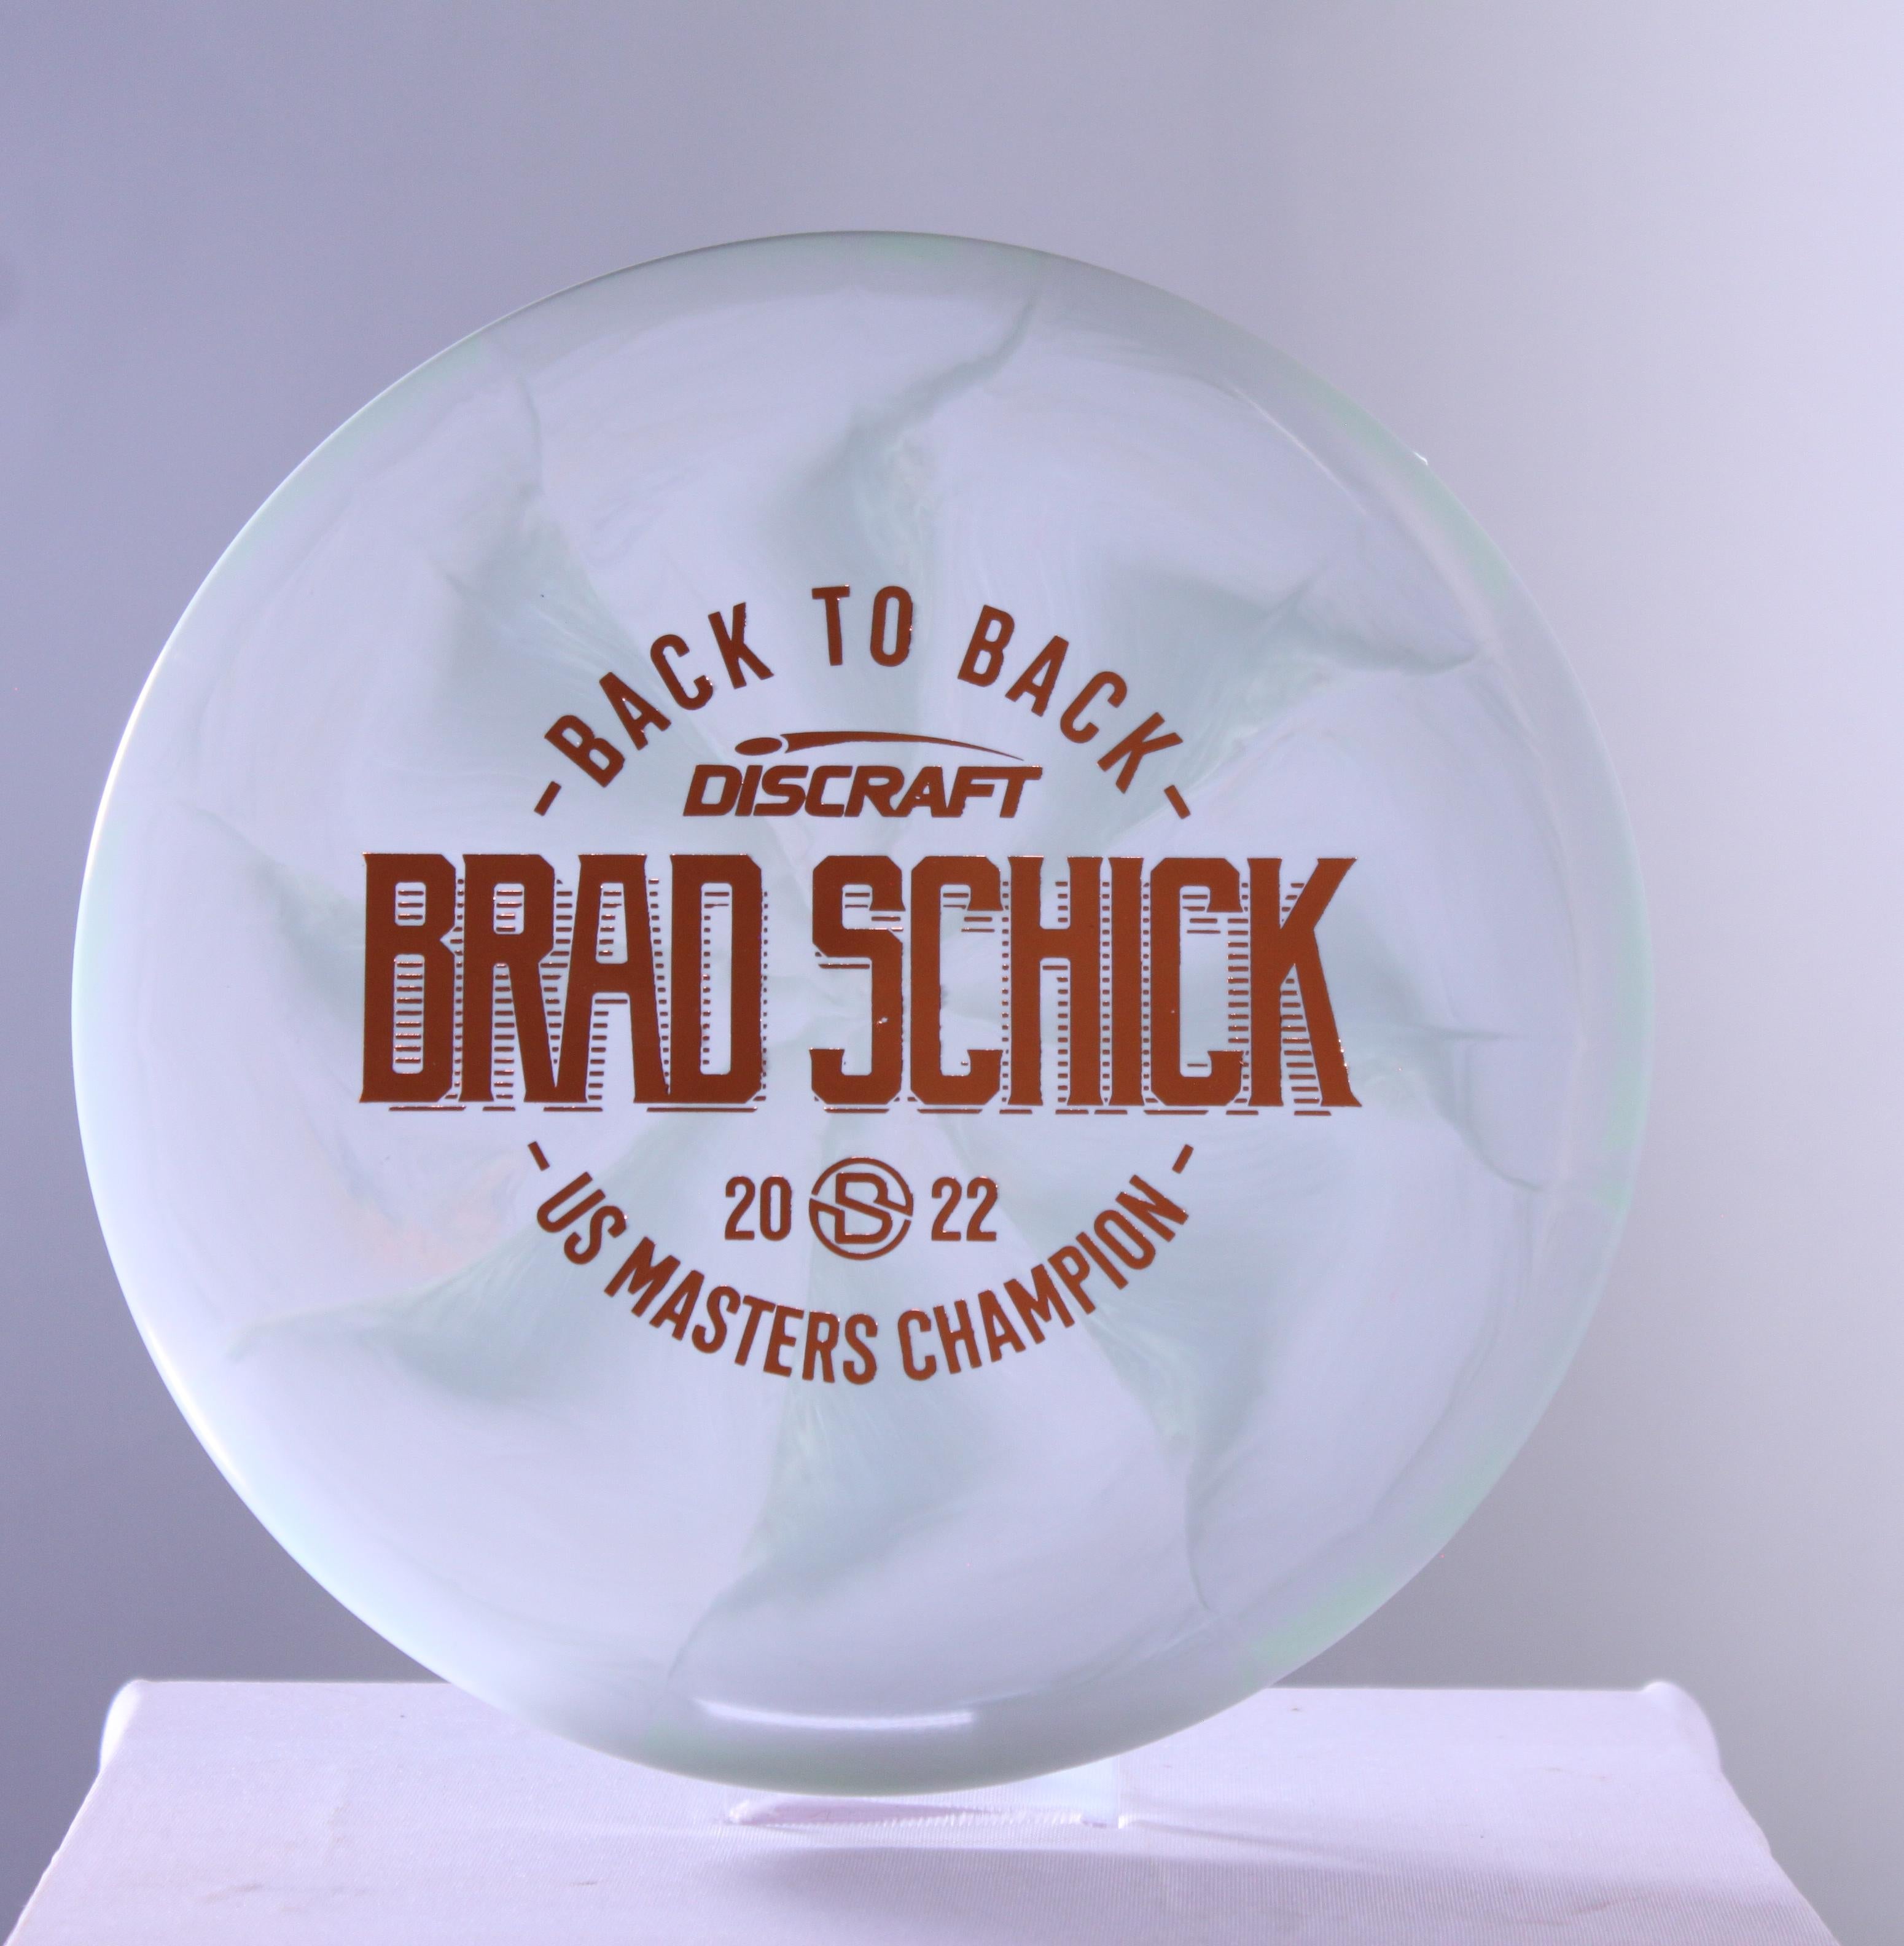 Brad Schick Back to Back US Masters Champion 2022 ESP FLX Buzzz